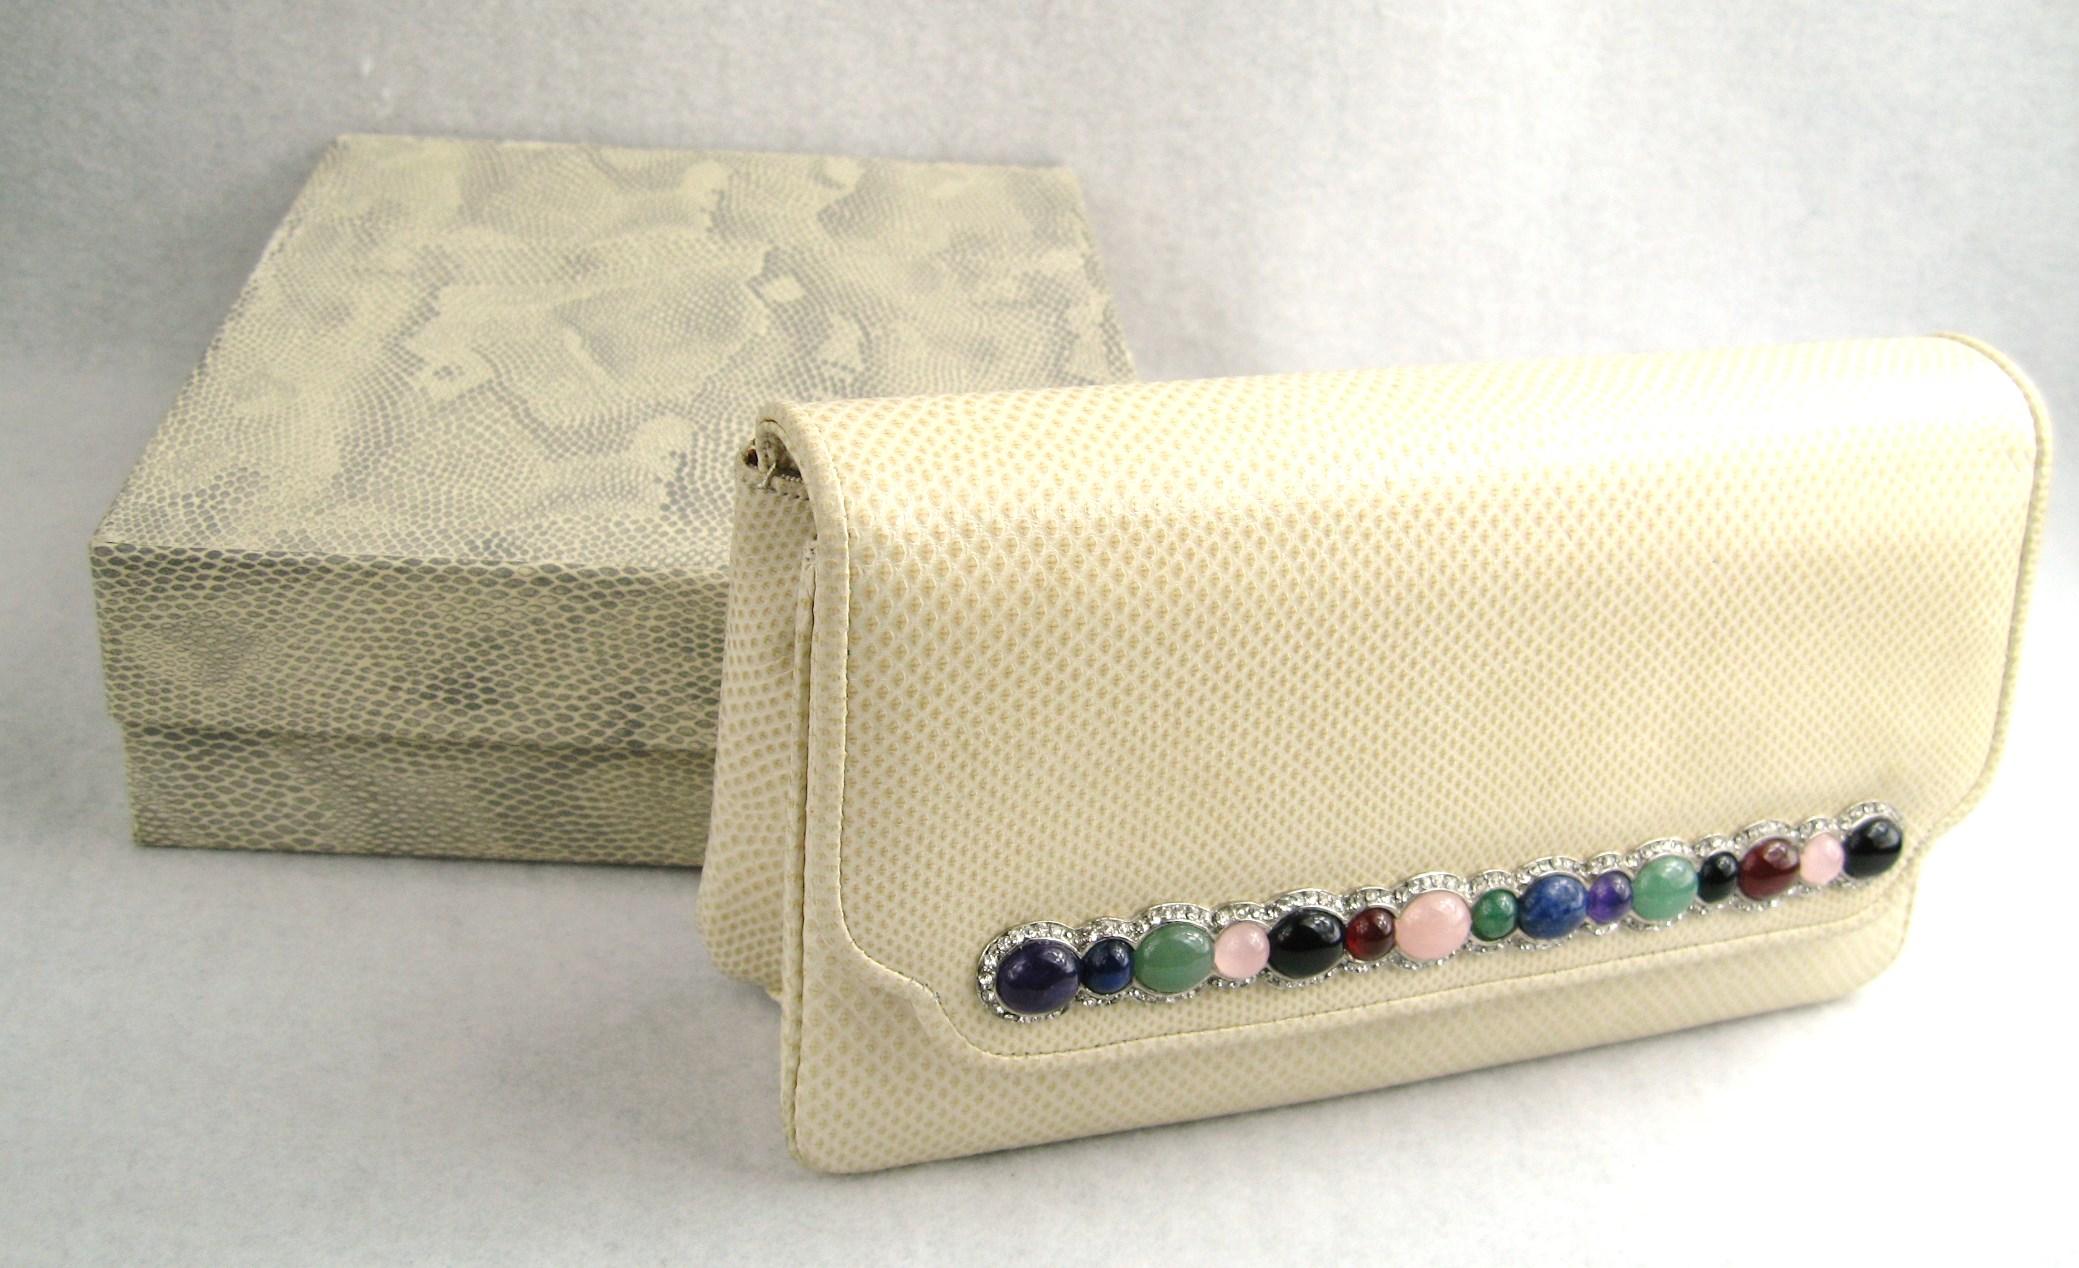 Judith Leiber Lizard Leather Evening Bag Handbag Clutch - Semi - Precious Stones For Sale 7